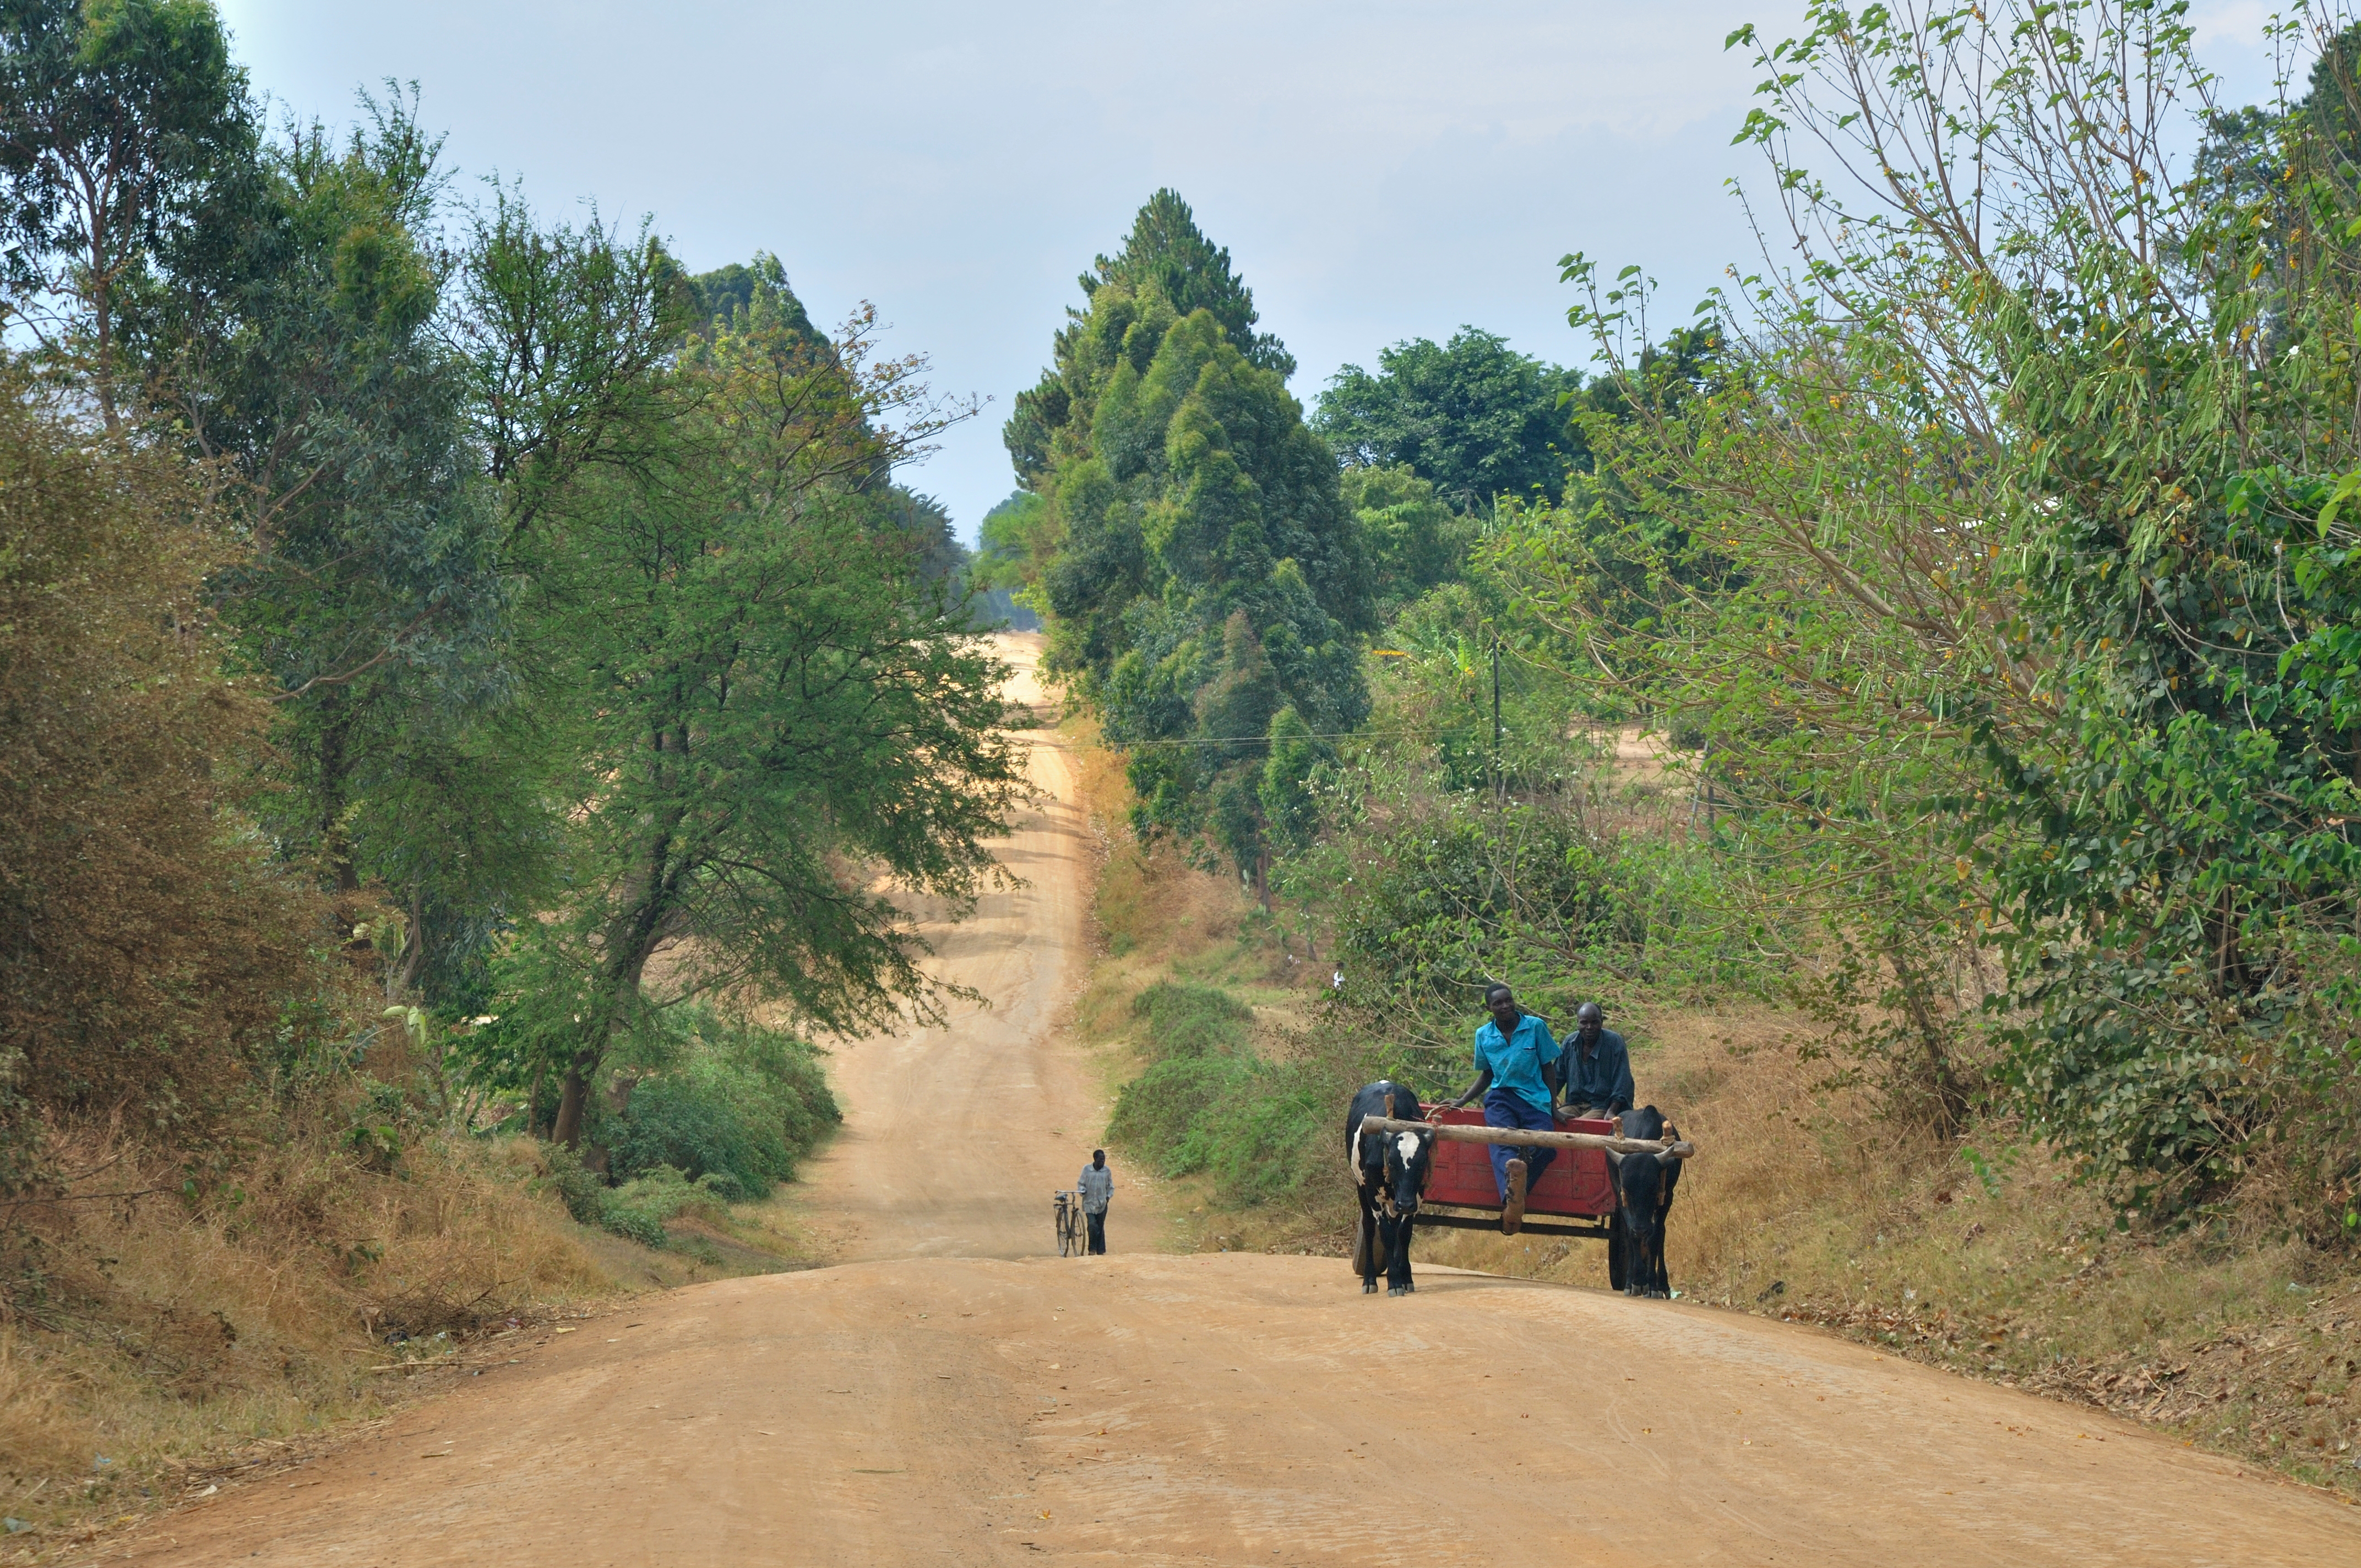 Malawi roads